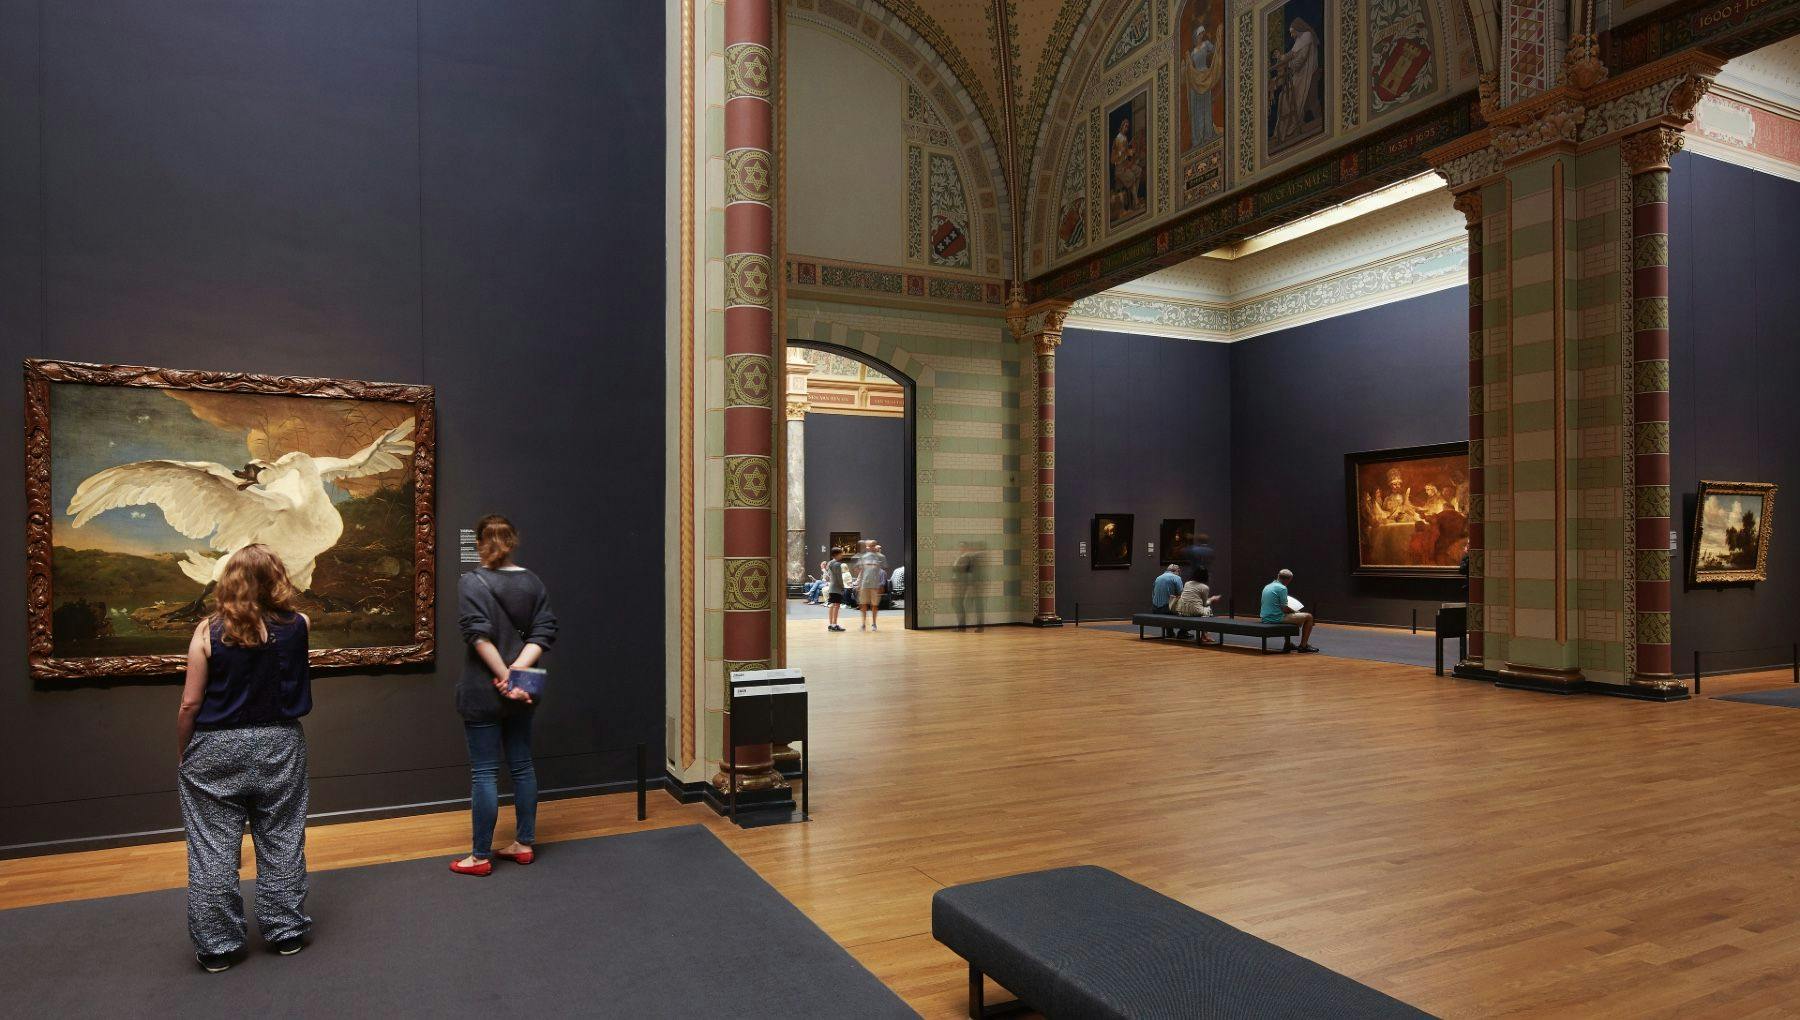 Rijksmuseum gallery of honour